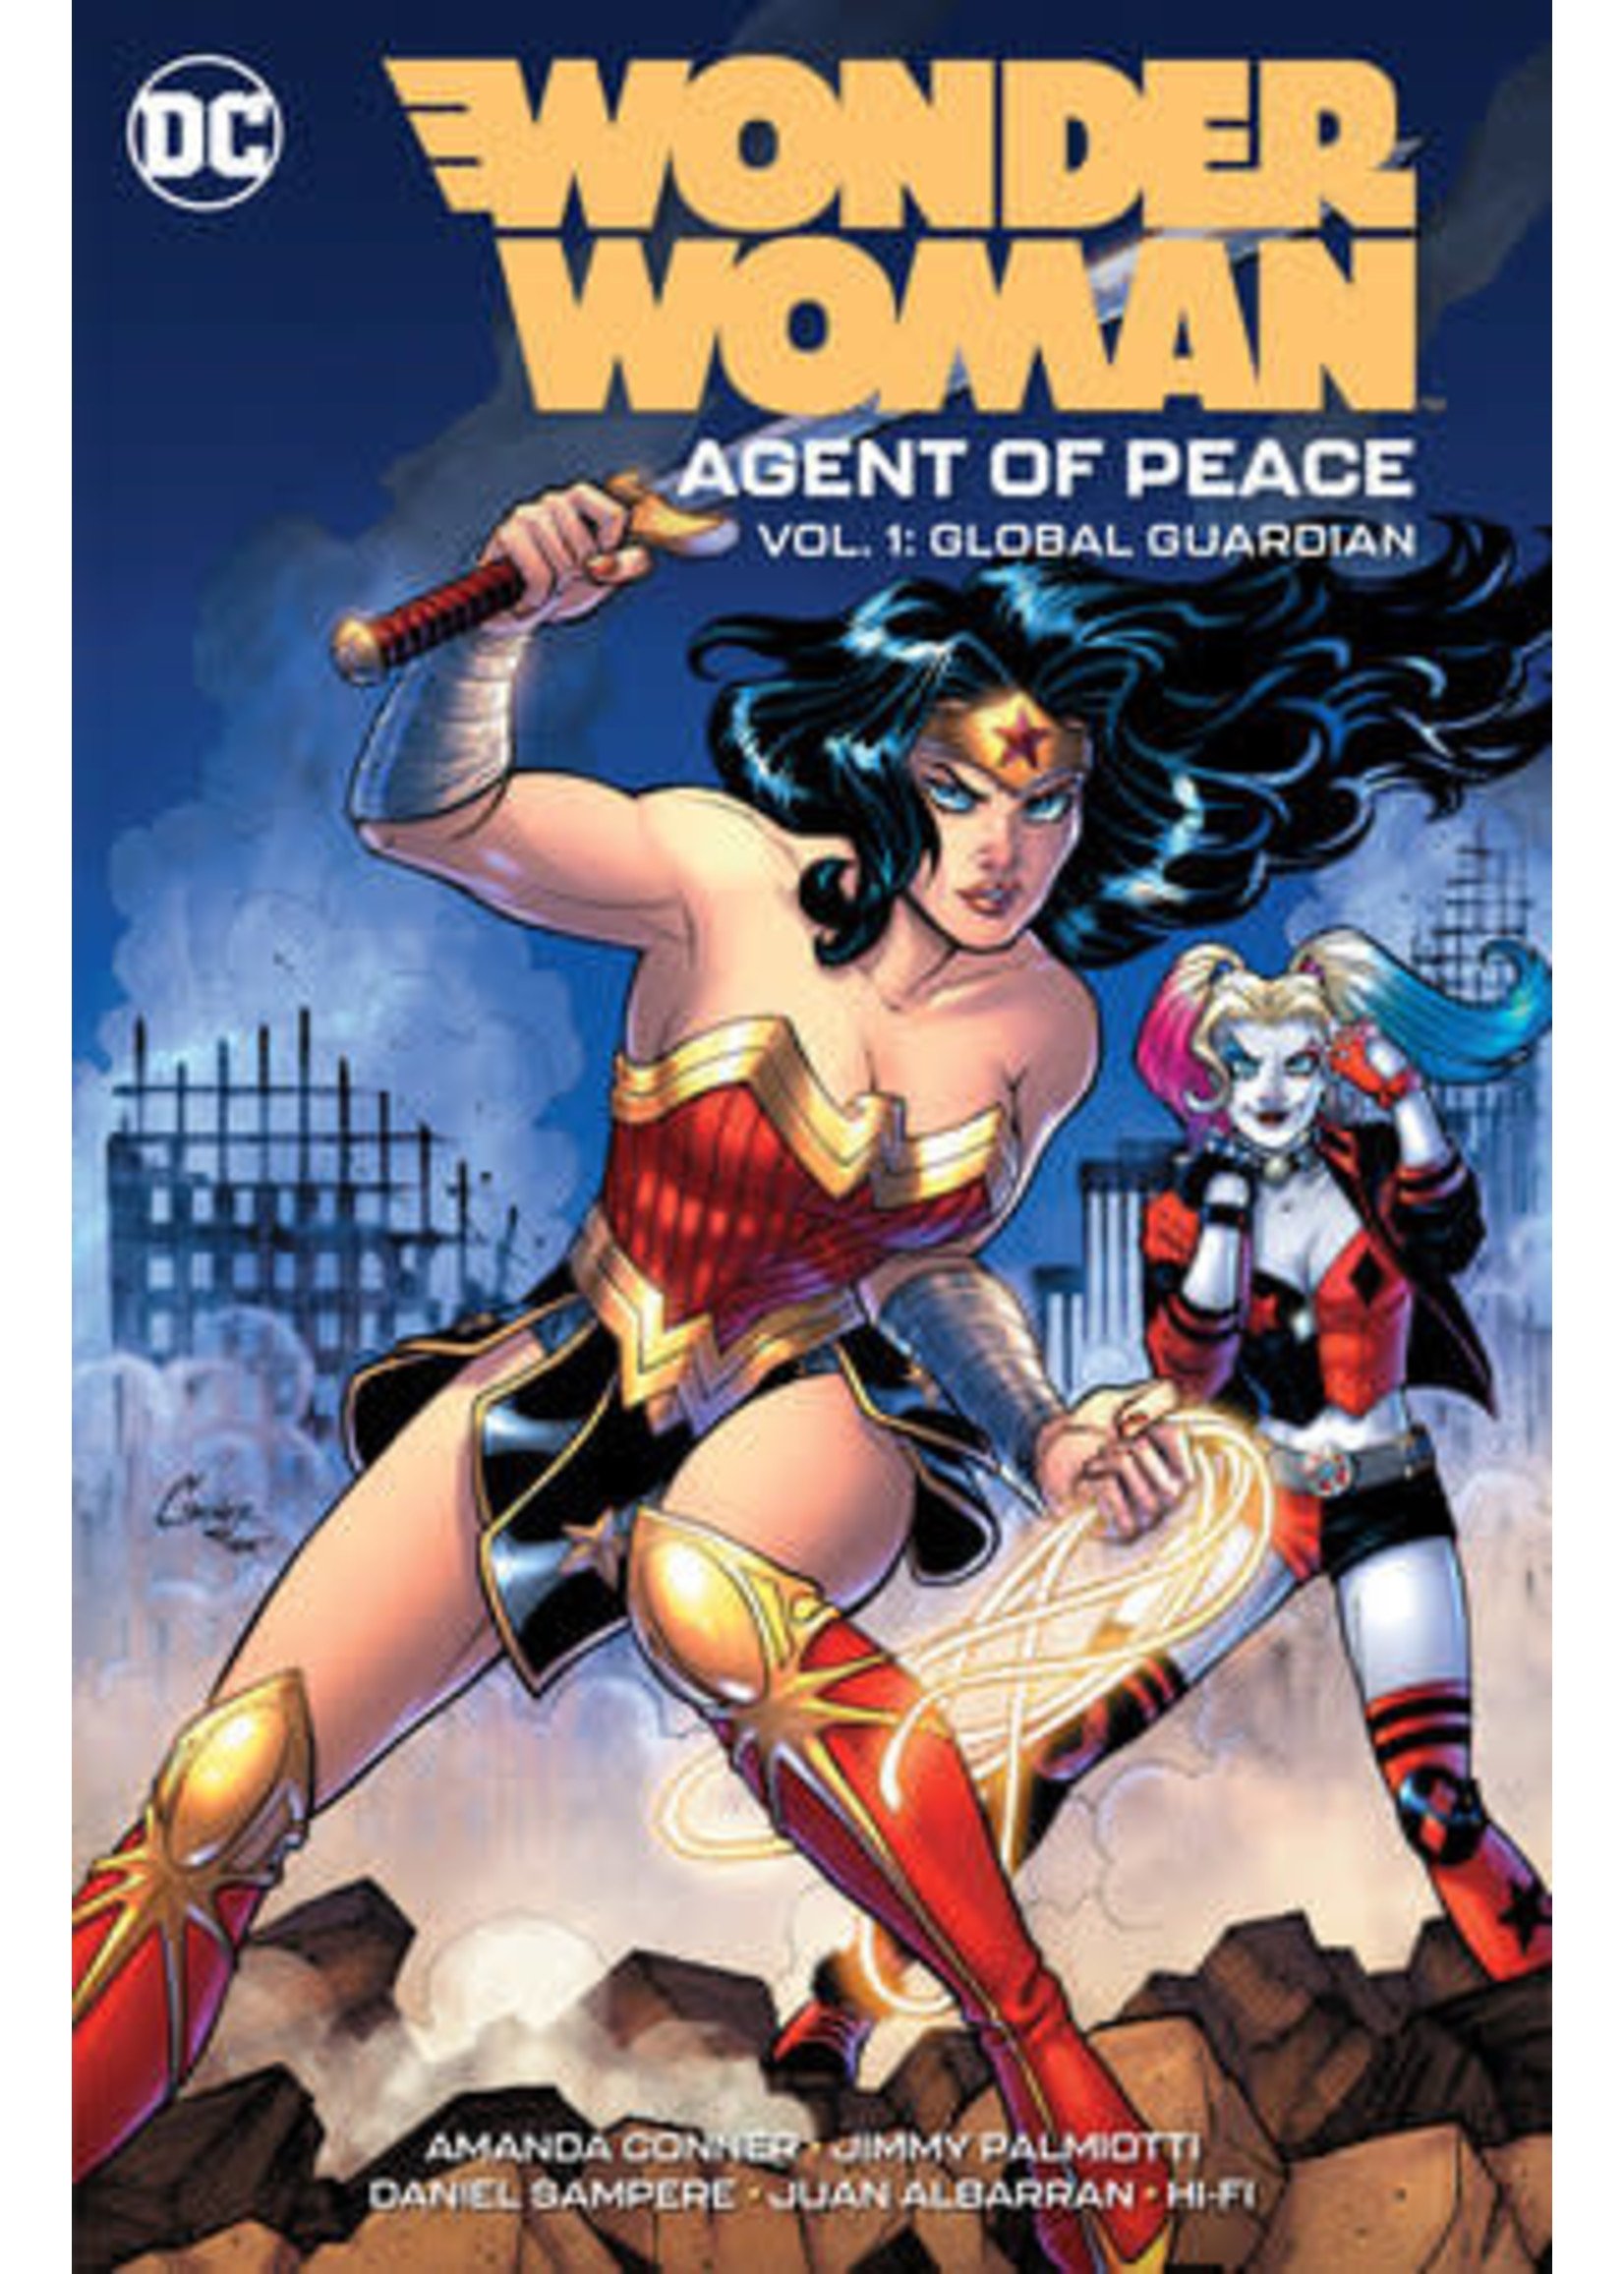 DC COMICS WONDER WOMAN AGENT OF PEACE VOL. 1 GLOBAL GUARDIAN